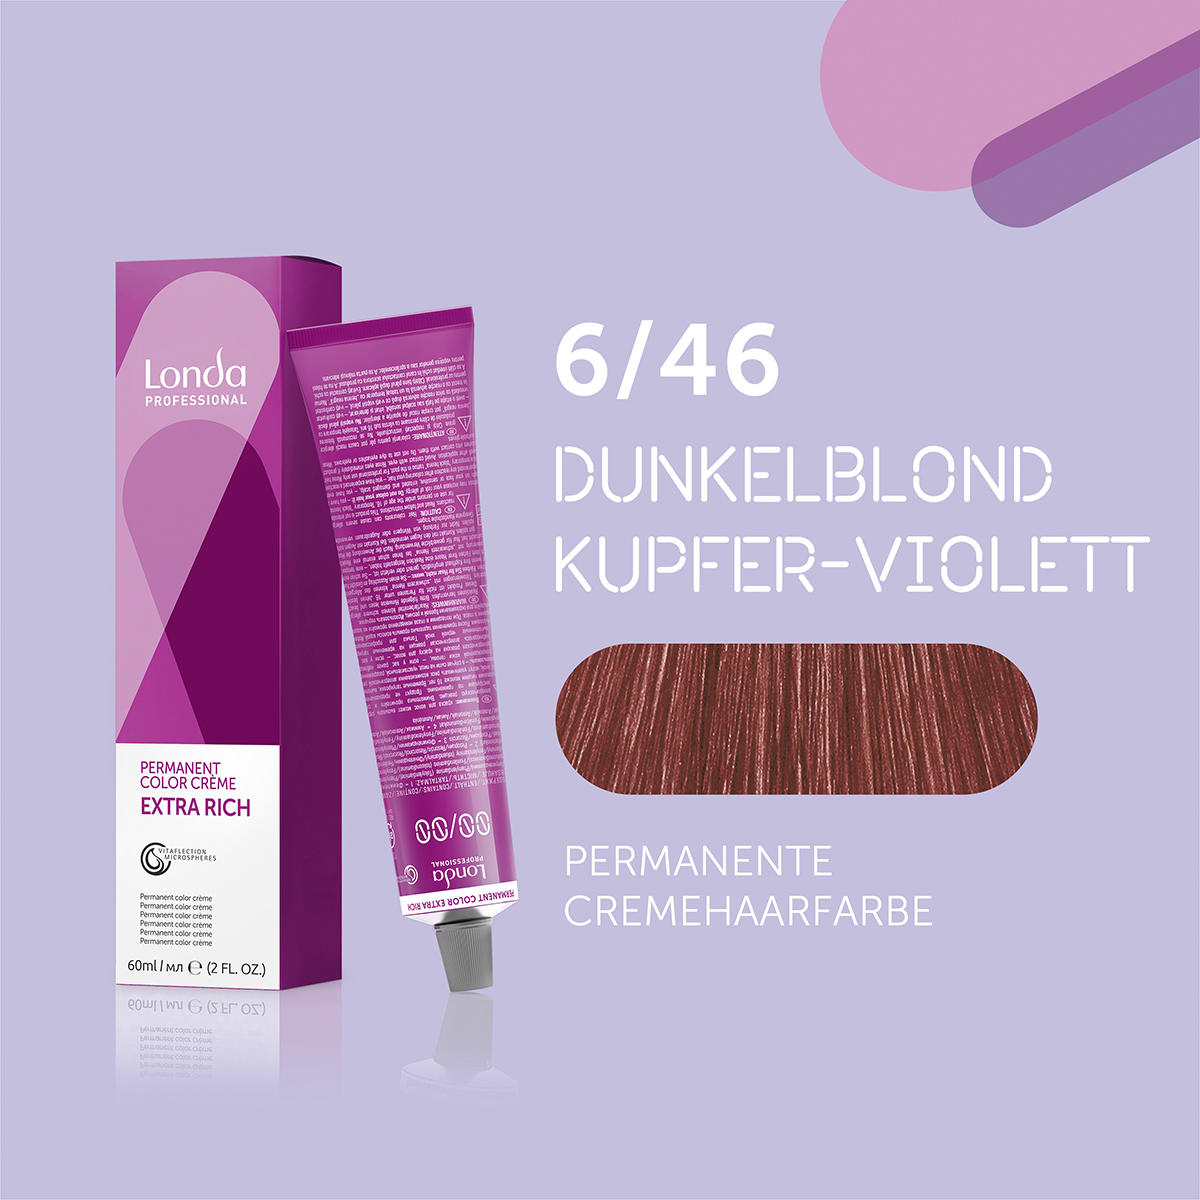 Londa Permanente Cremehaarfarbe Extra Rich 6/46 Dunkelblond Kupfer Violett, Tube 60 ml - 1